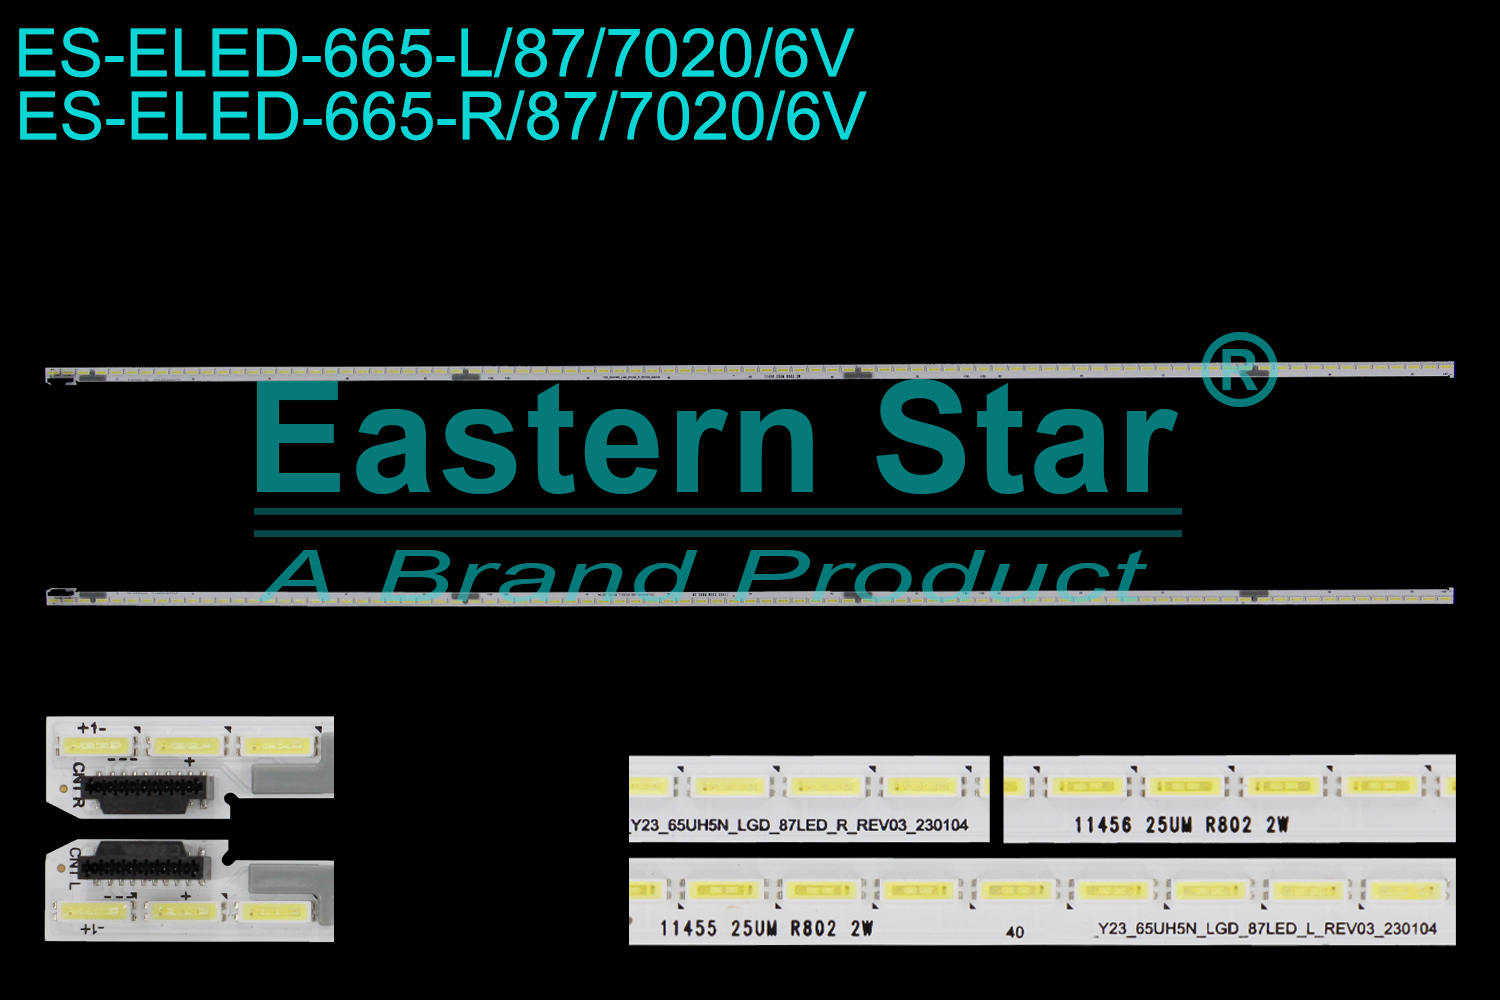 ES-ELED-665 ELED/EDGE TV backlight use for 65'' Lg L: 11455 Y23_65UH5N_LGD_87LED_L_REV03_230104 25UM R802 2W STL650AW4-L PP0324 A1   R: 11456 Y23_65UH5N_LGD_87LED_R REV03_230104 25UM R802 2W STL650AW4-R P90424 A1 LED STRIPS(/)